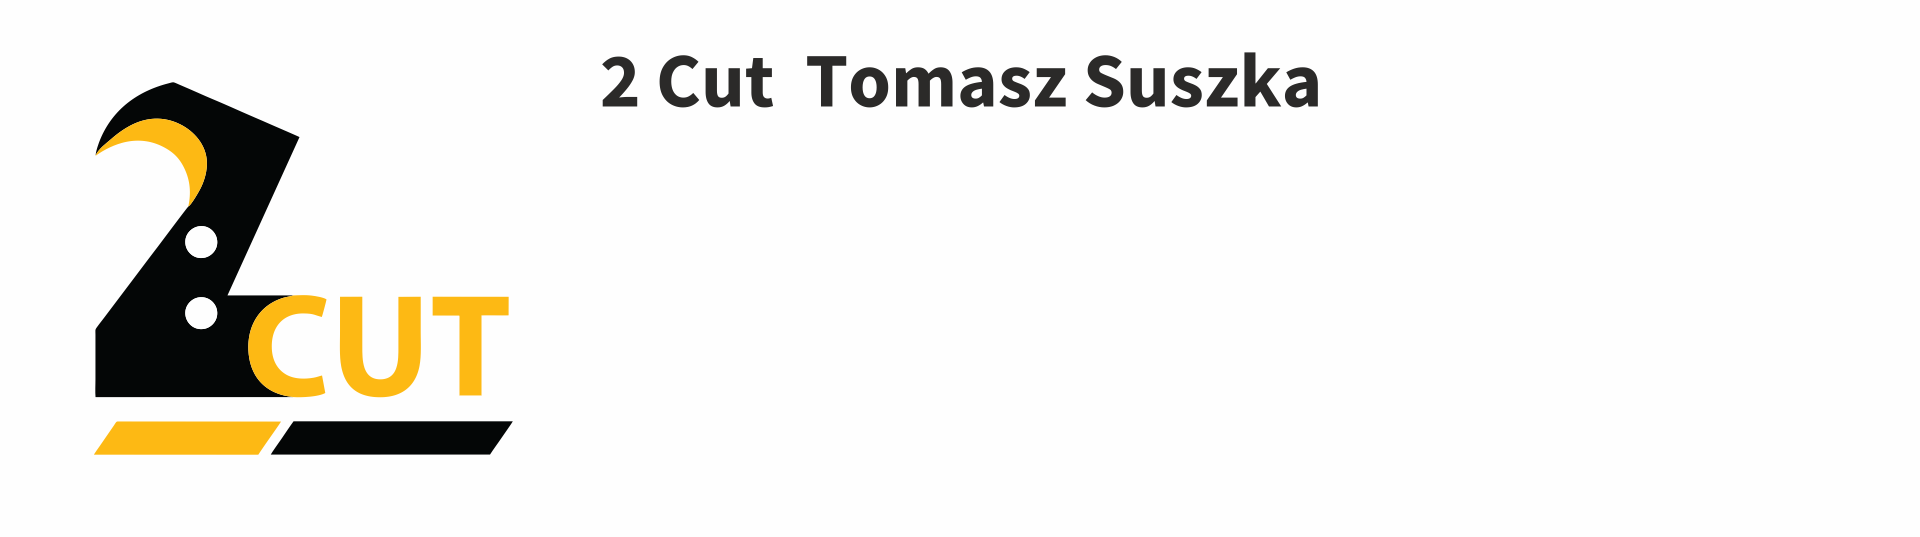 2Cut Tomasz Suszka